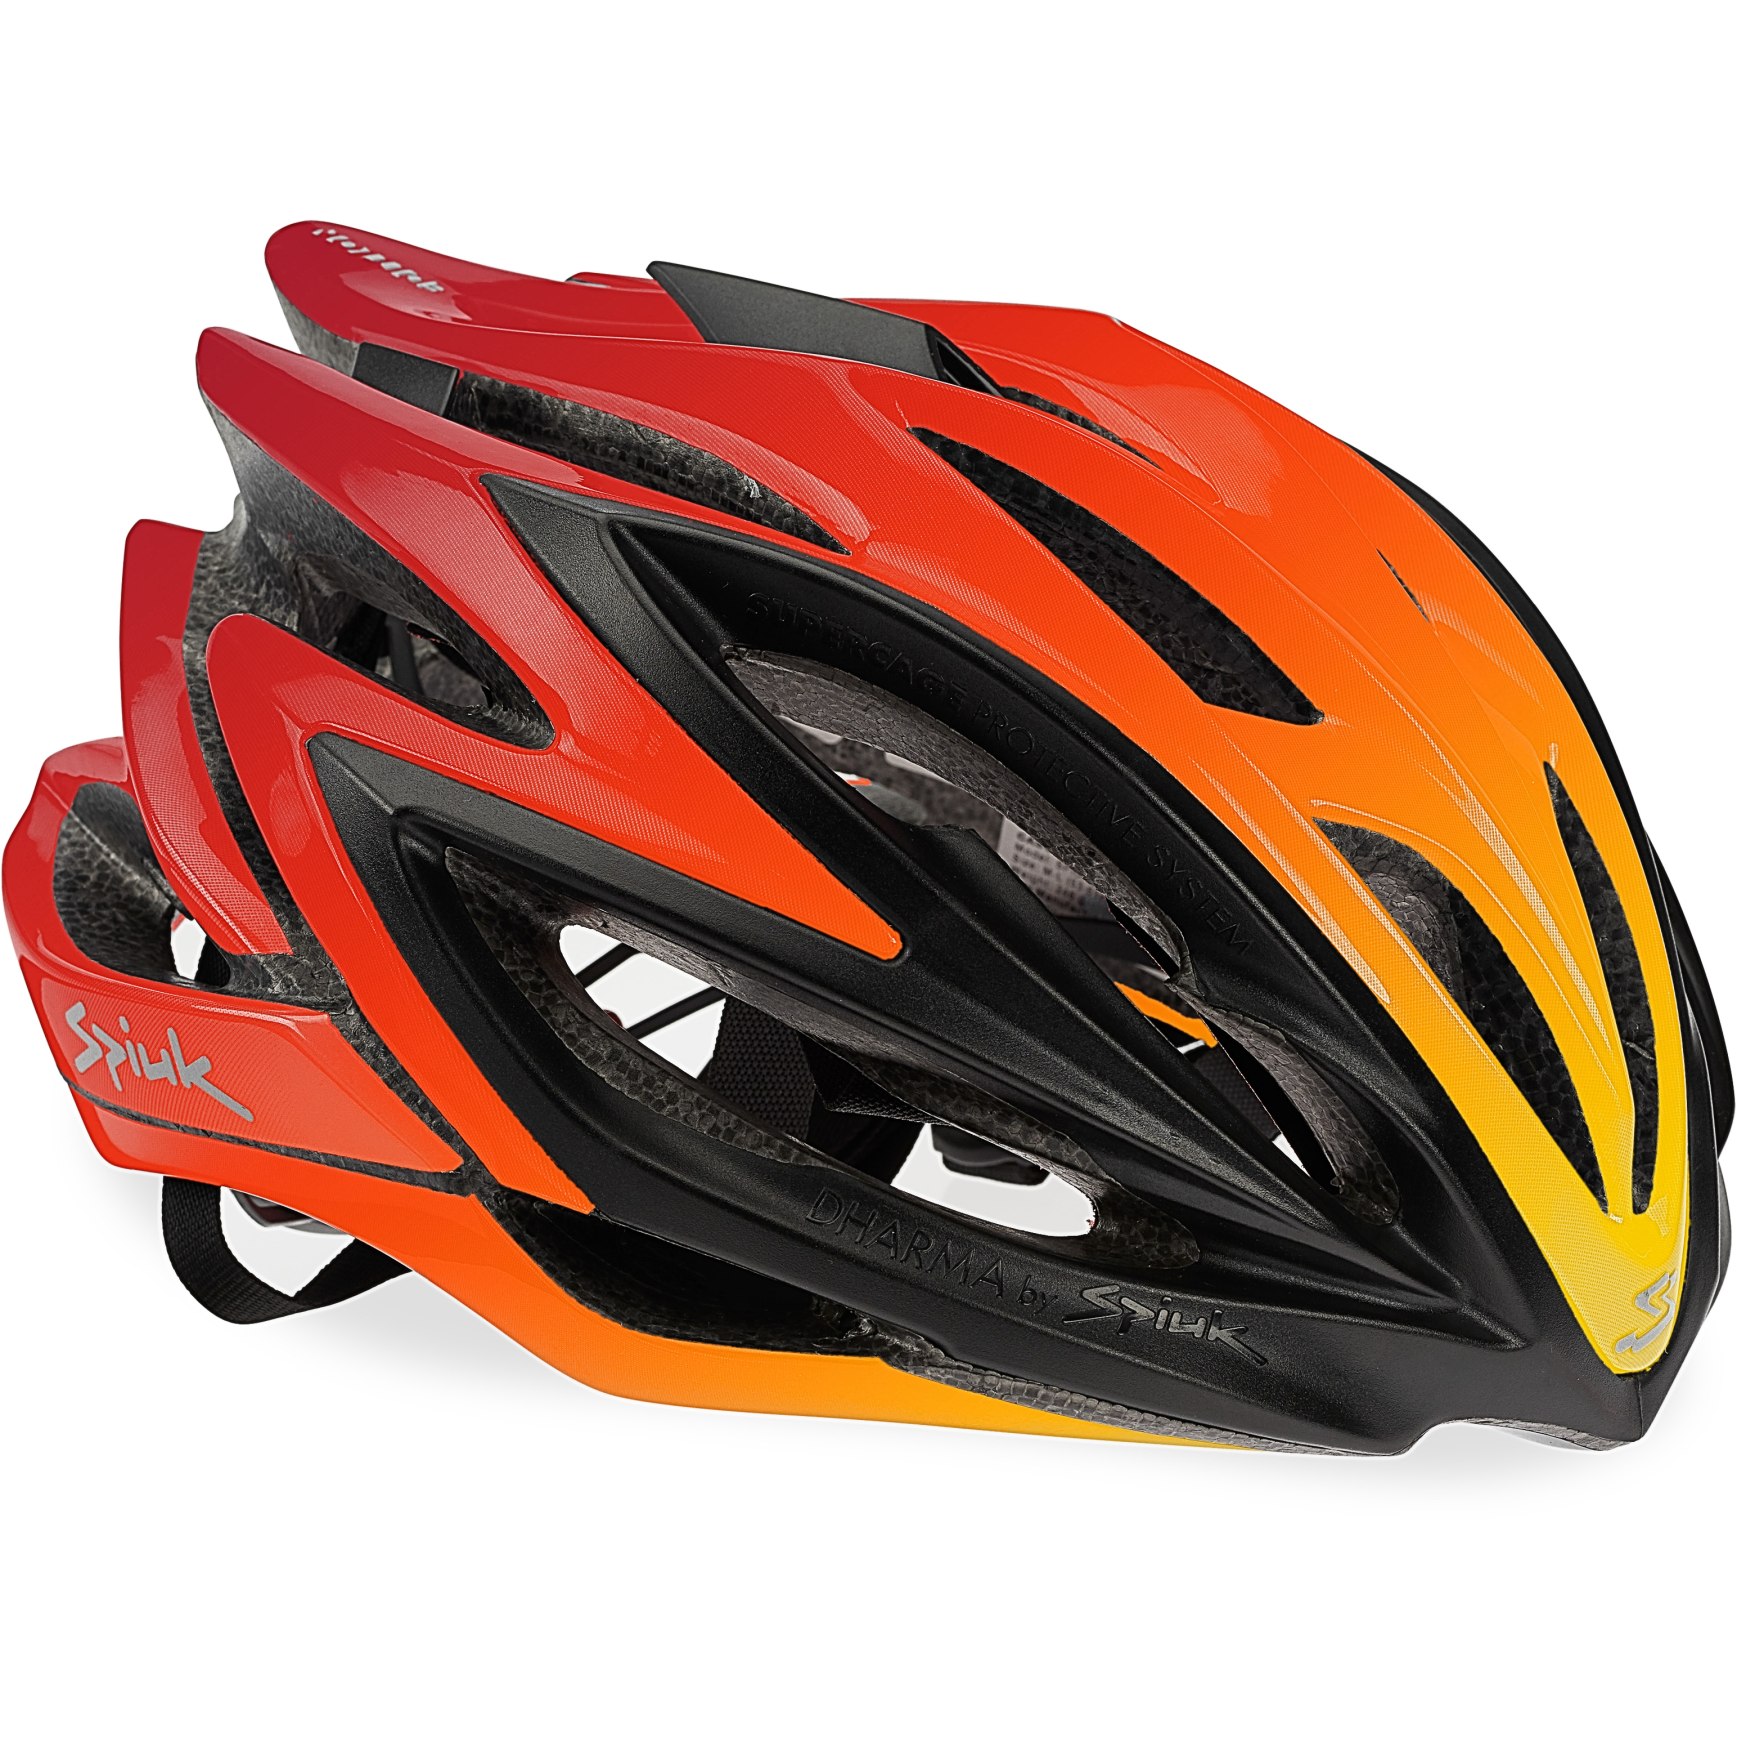 Image of Spiuk Dharma Edition Helmet - orange